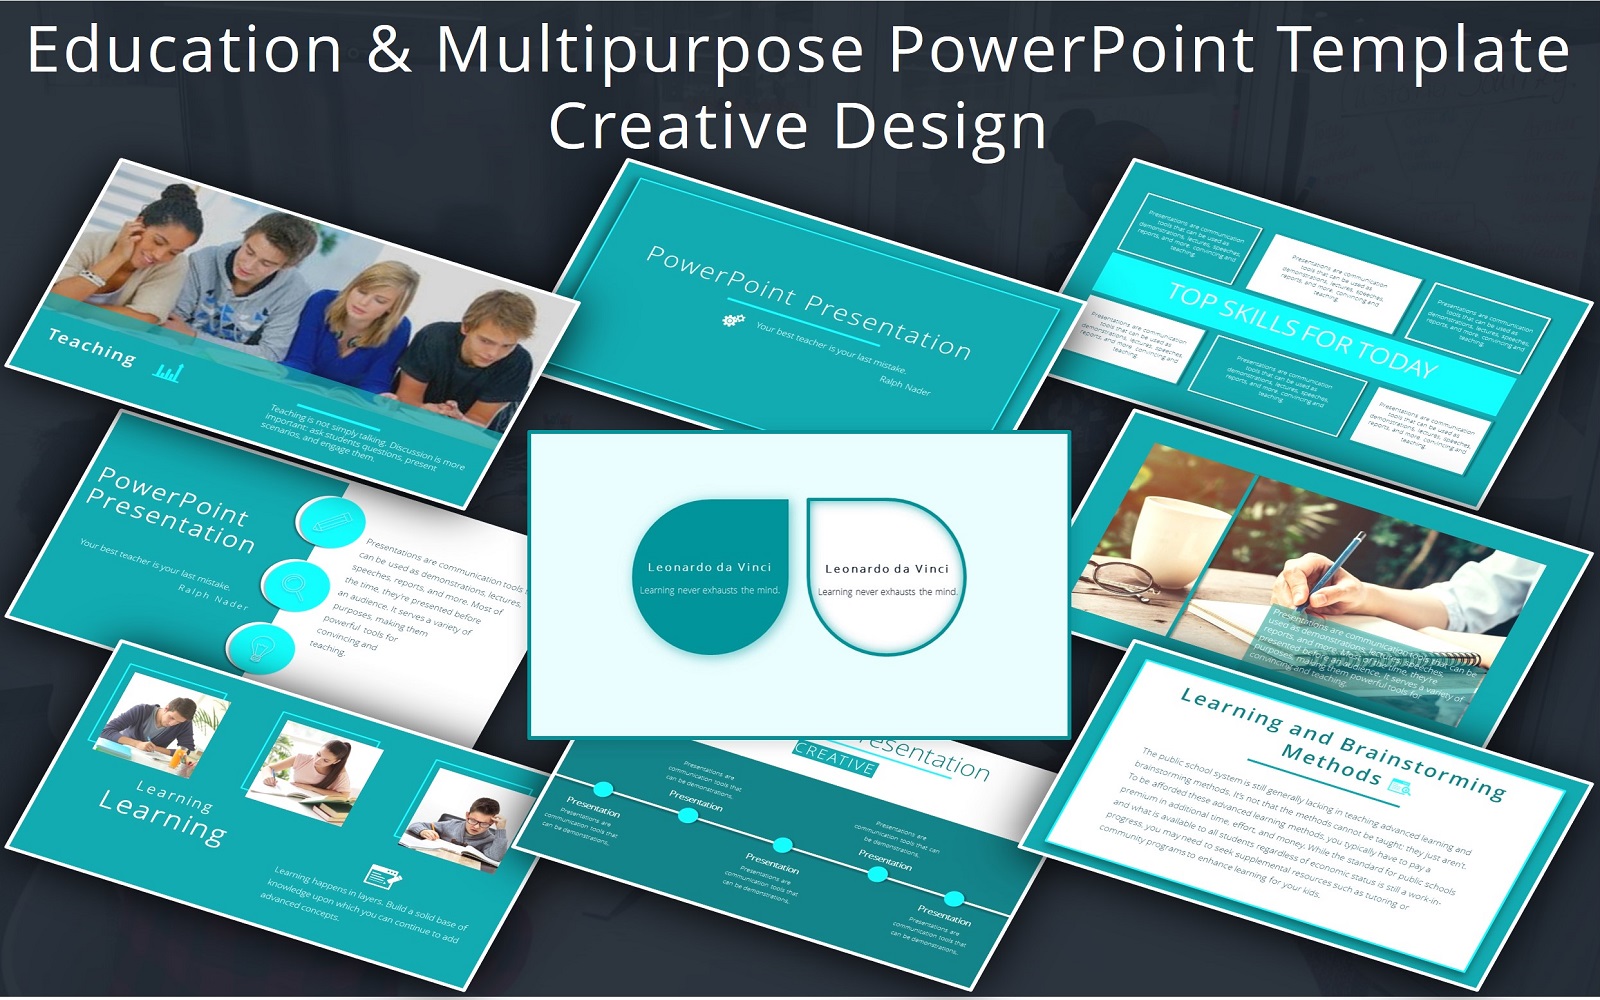 Education & Multipurpose PowerPoint Template